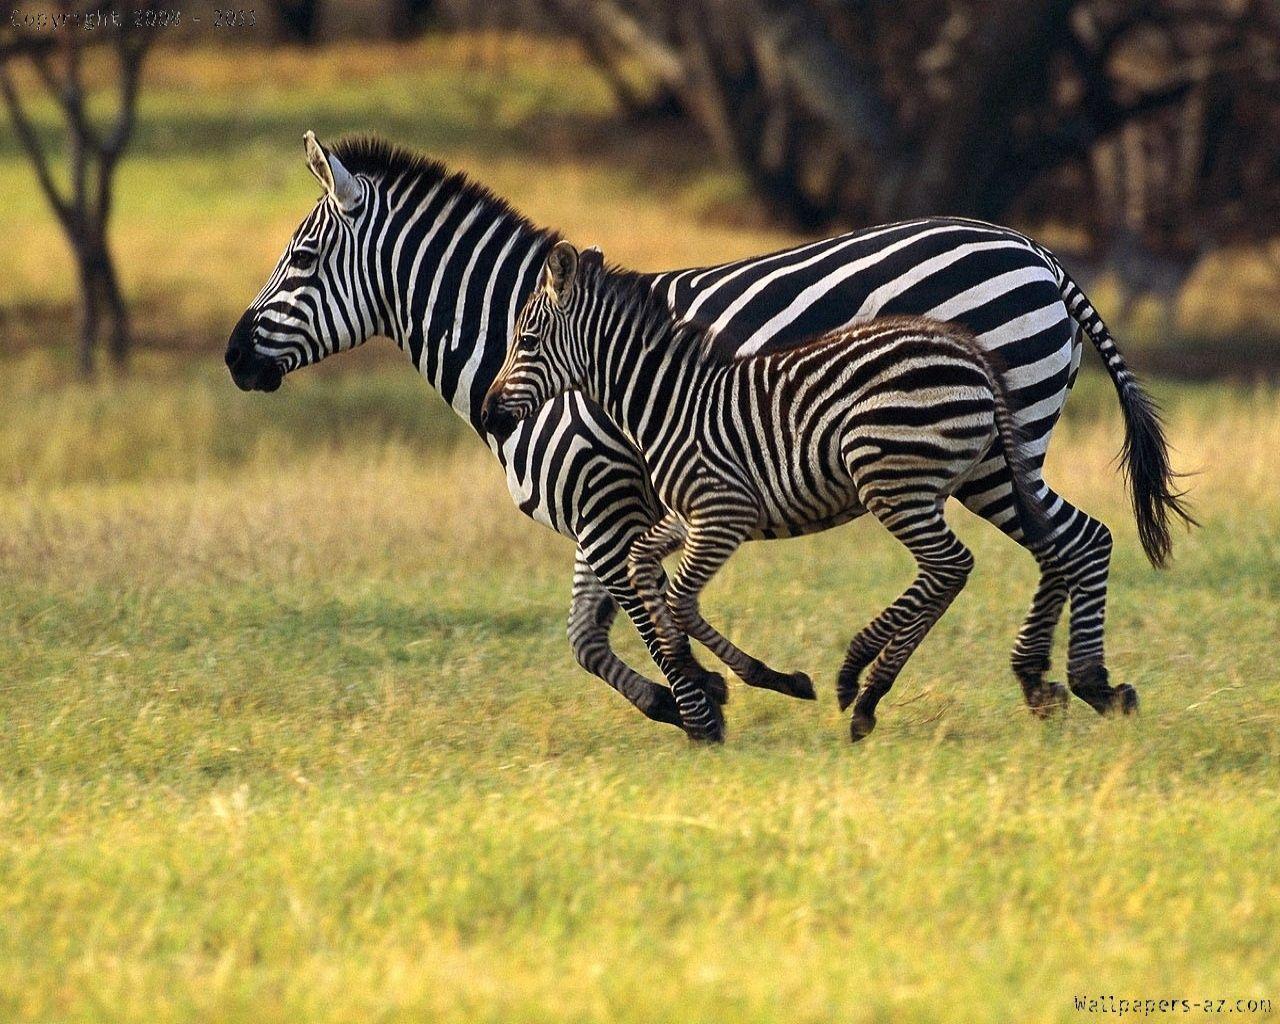 Mom and baby zebras running together. elizabeth's board